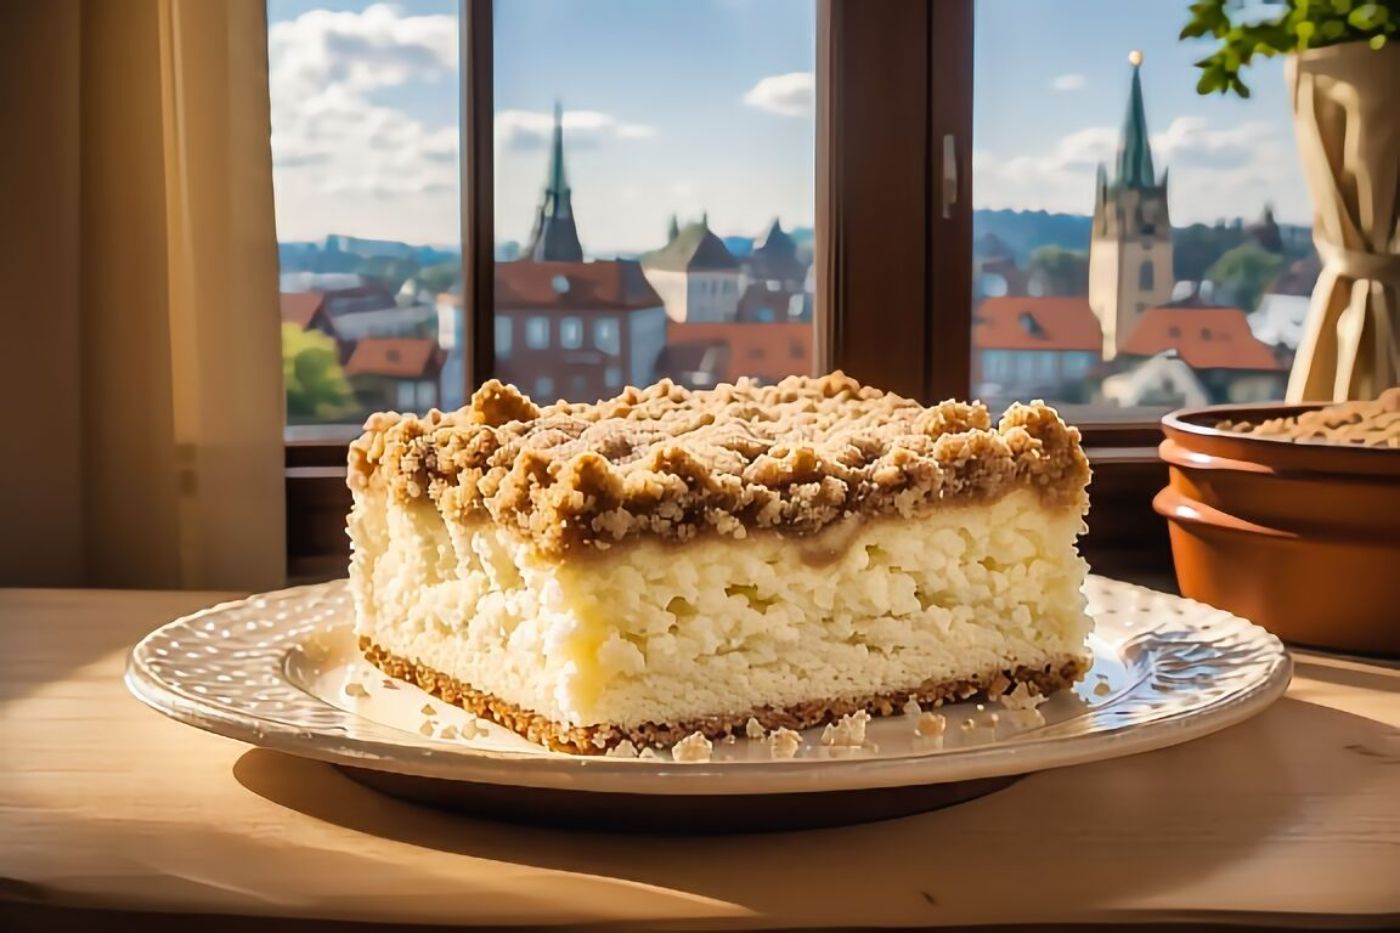 Streuselkuchen (German Crumb Cake)